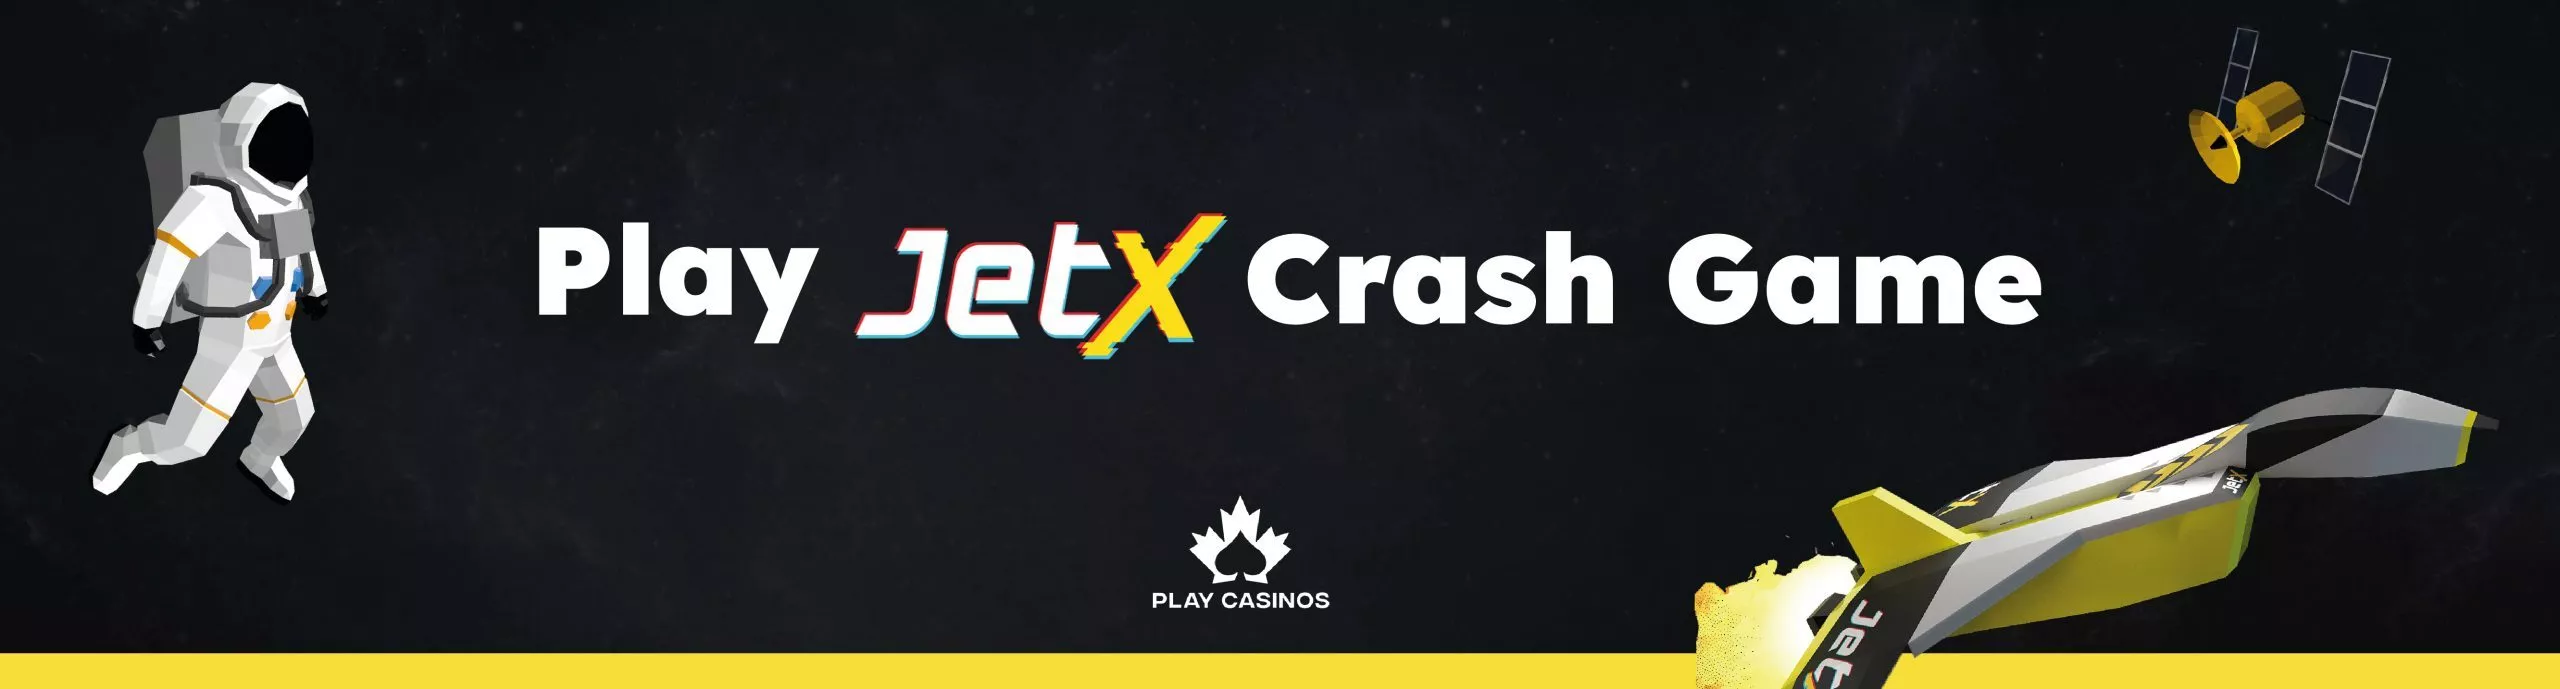 Play JetX Crash Game